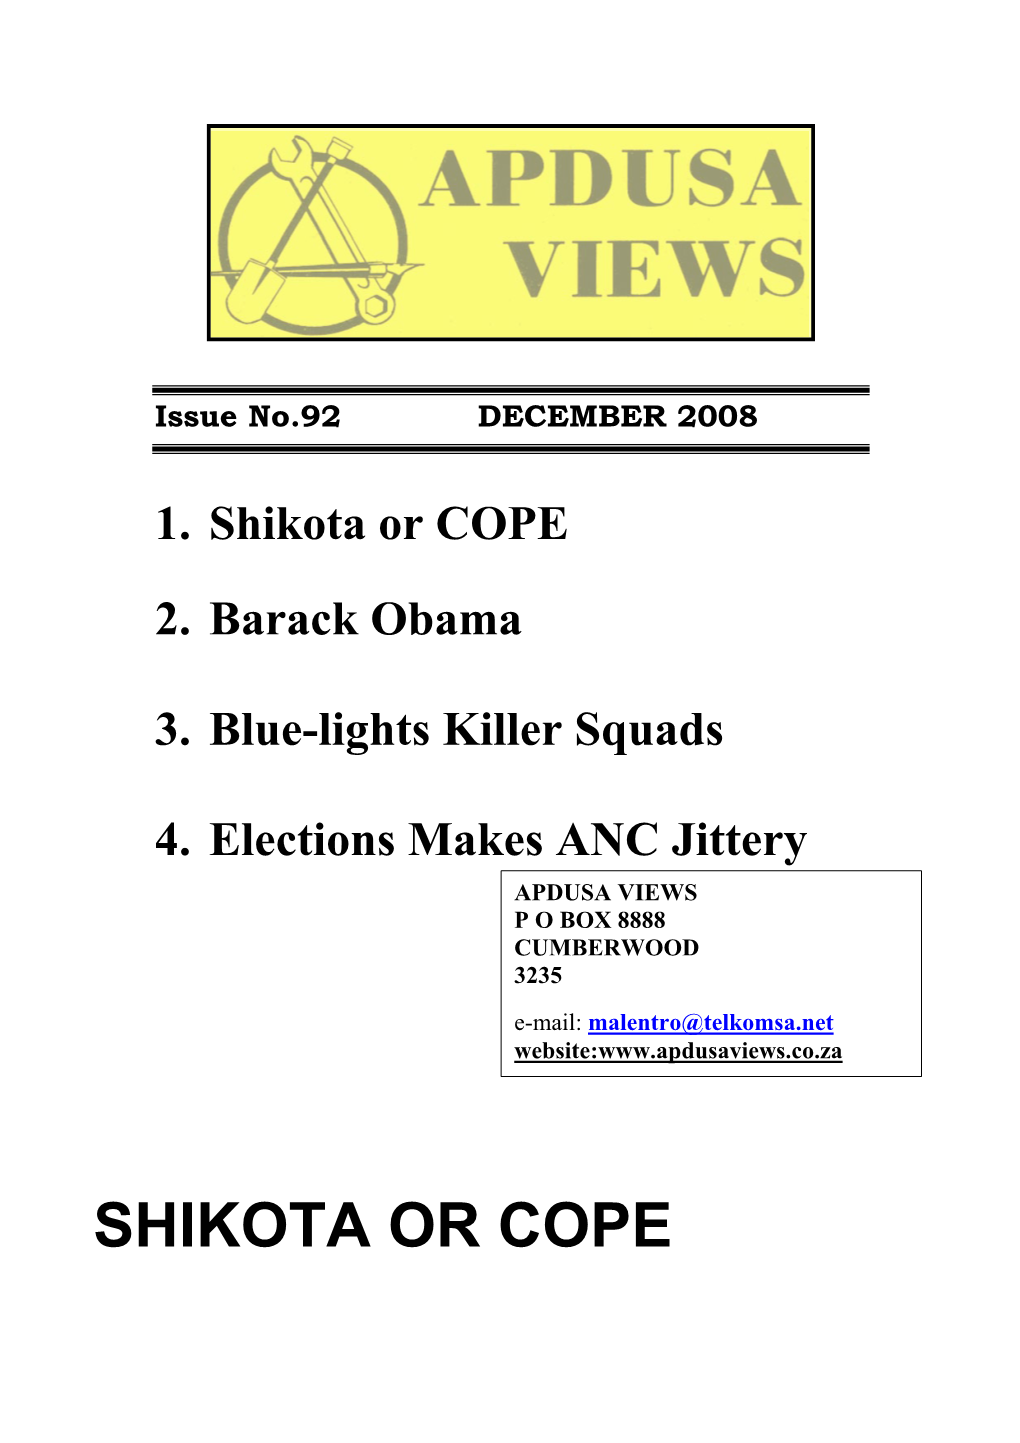 1. Shikota Or COPE 2. Barack Obama 3. Blue-Lights Killer Squads 4. Elections Makes ANC Jittery